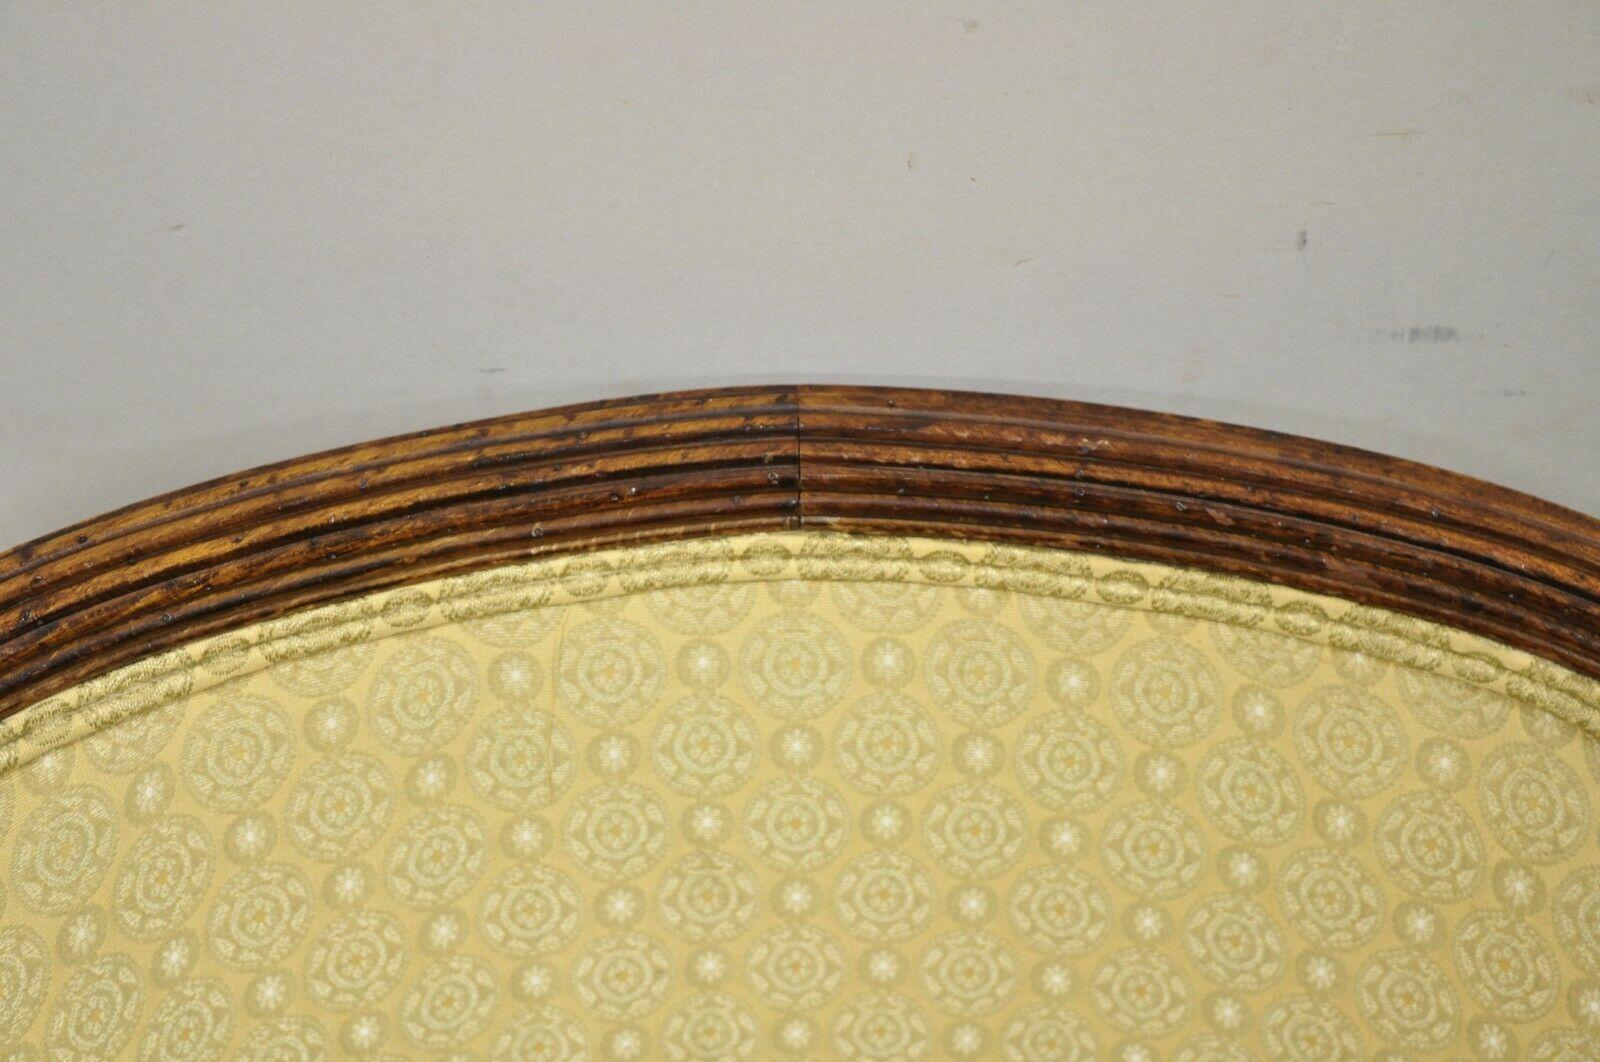 Fabric Italian Regency Carved Gold Gilt Wood Swans Barrel Back Club Chair, a Pair